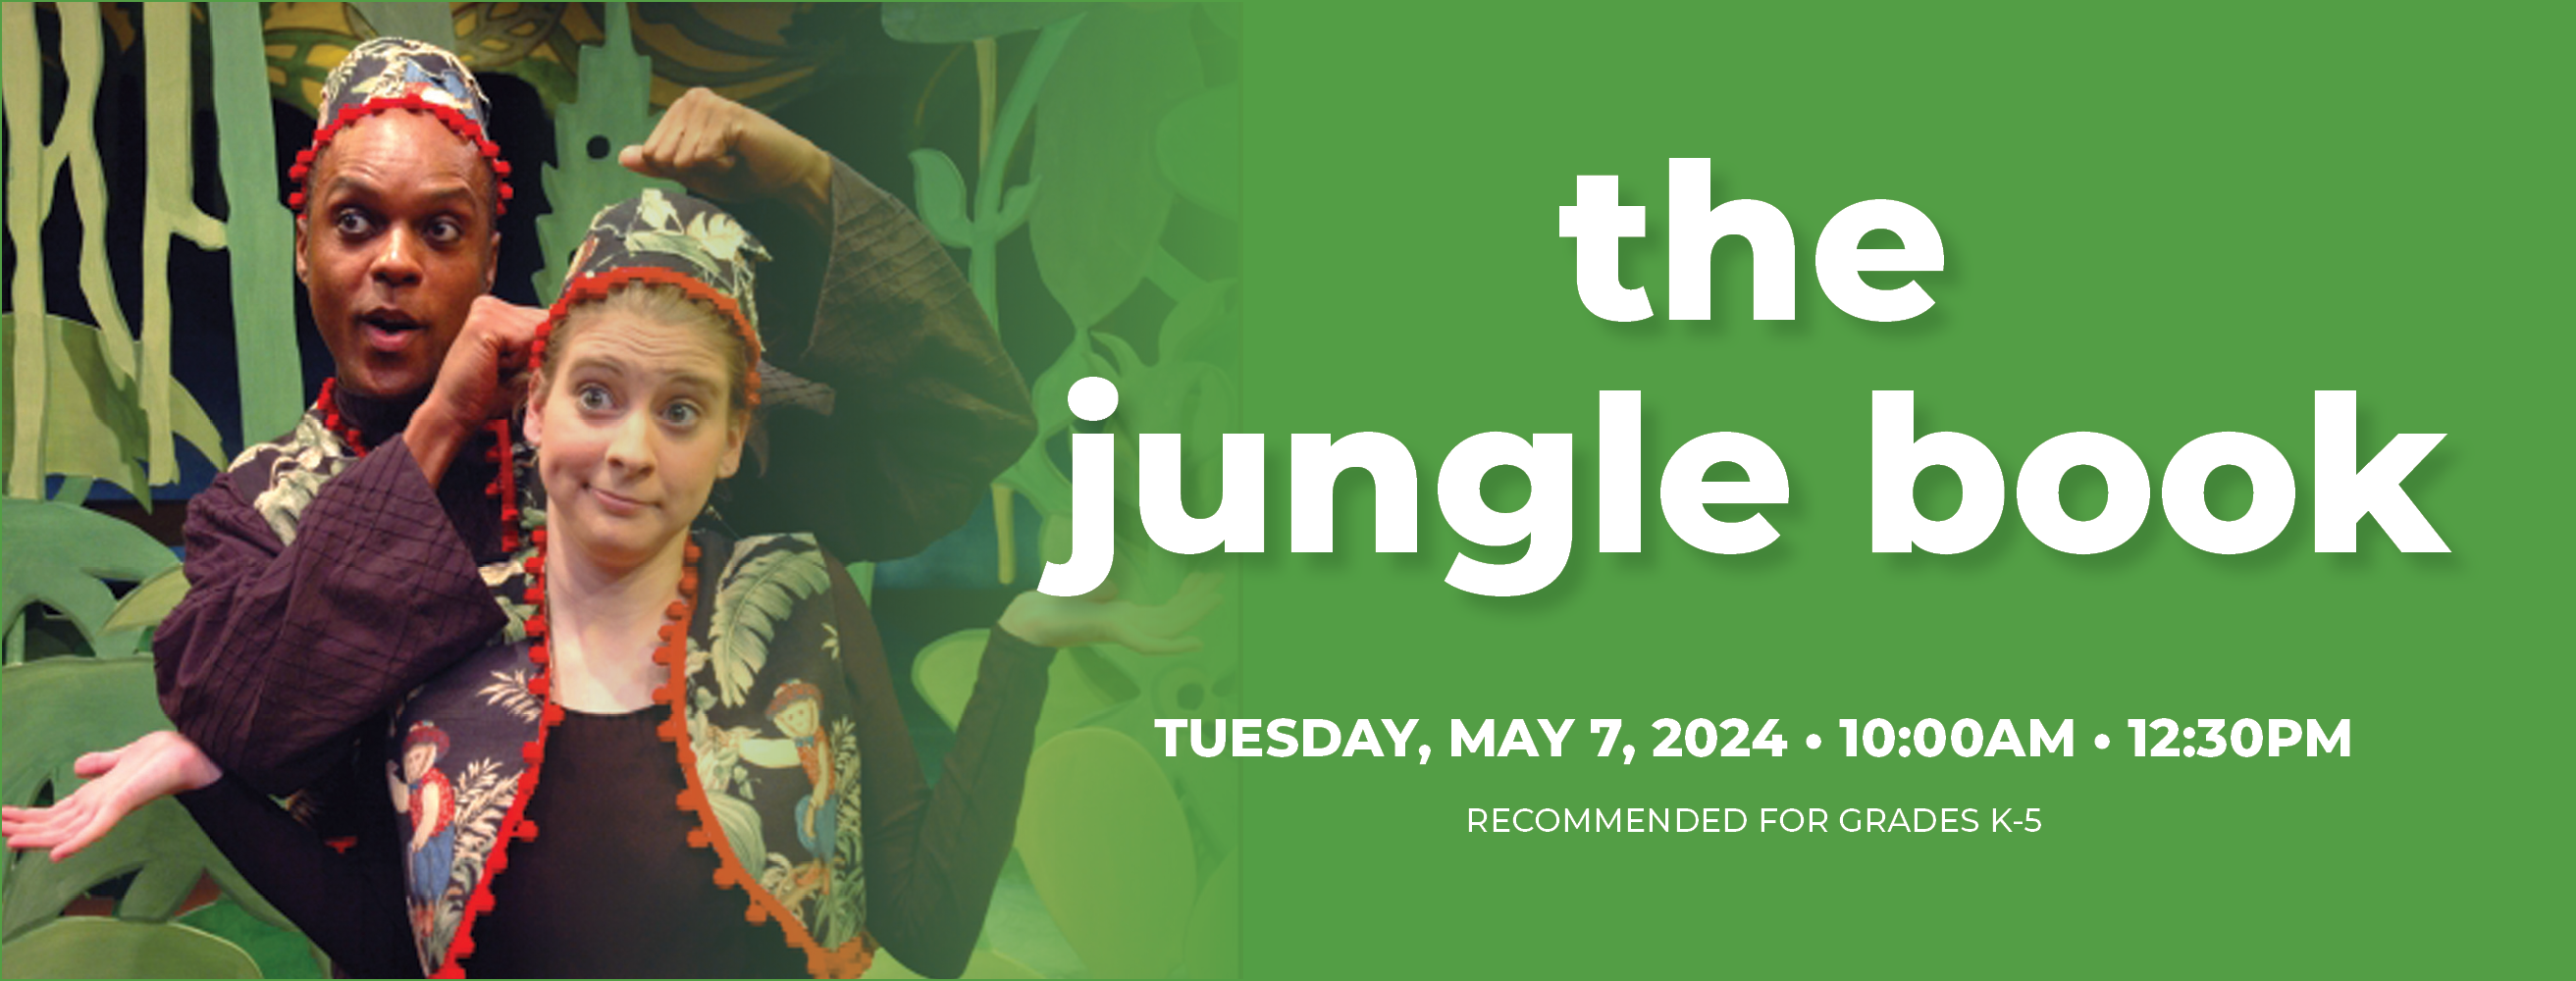 The Jungle Book - 12:30 pm